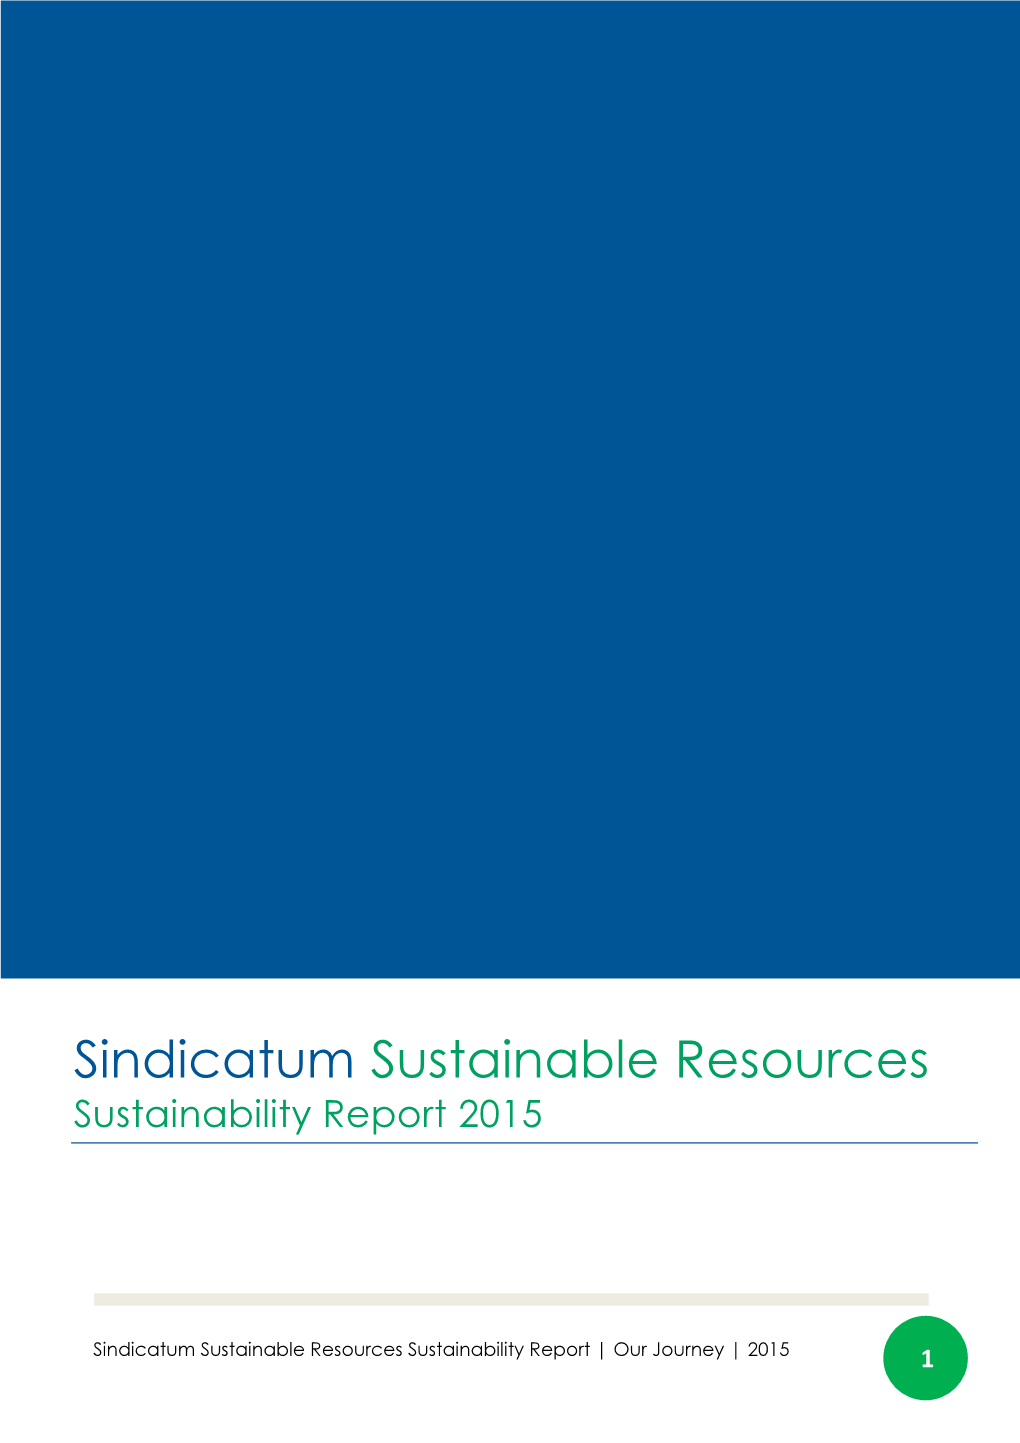 Sindicatum Sustainable Resources Sustainability Report 2015